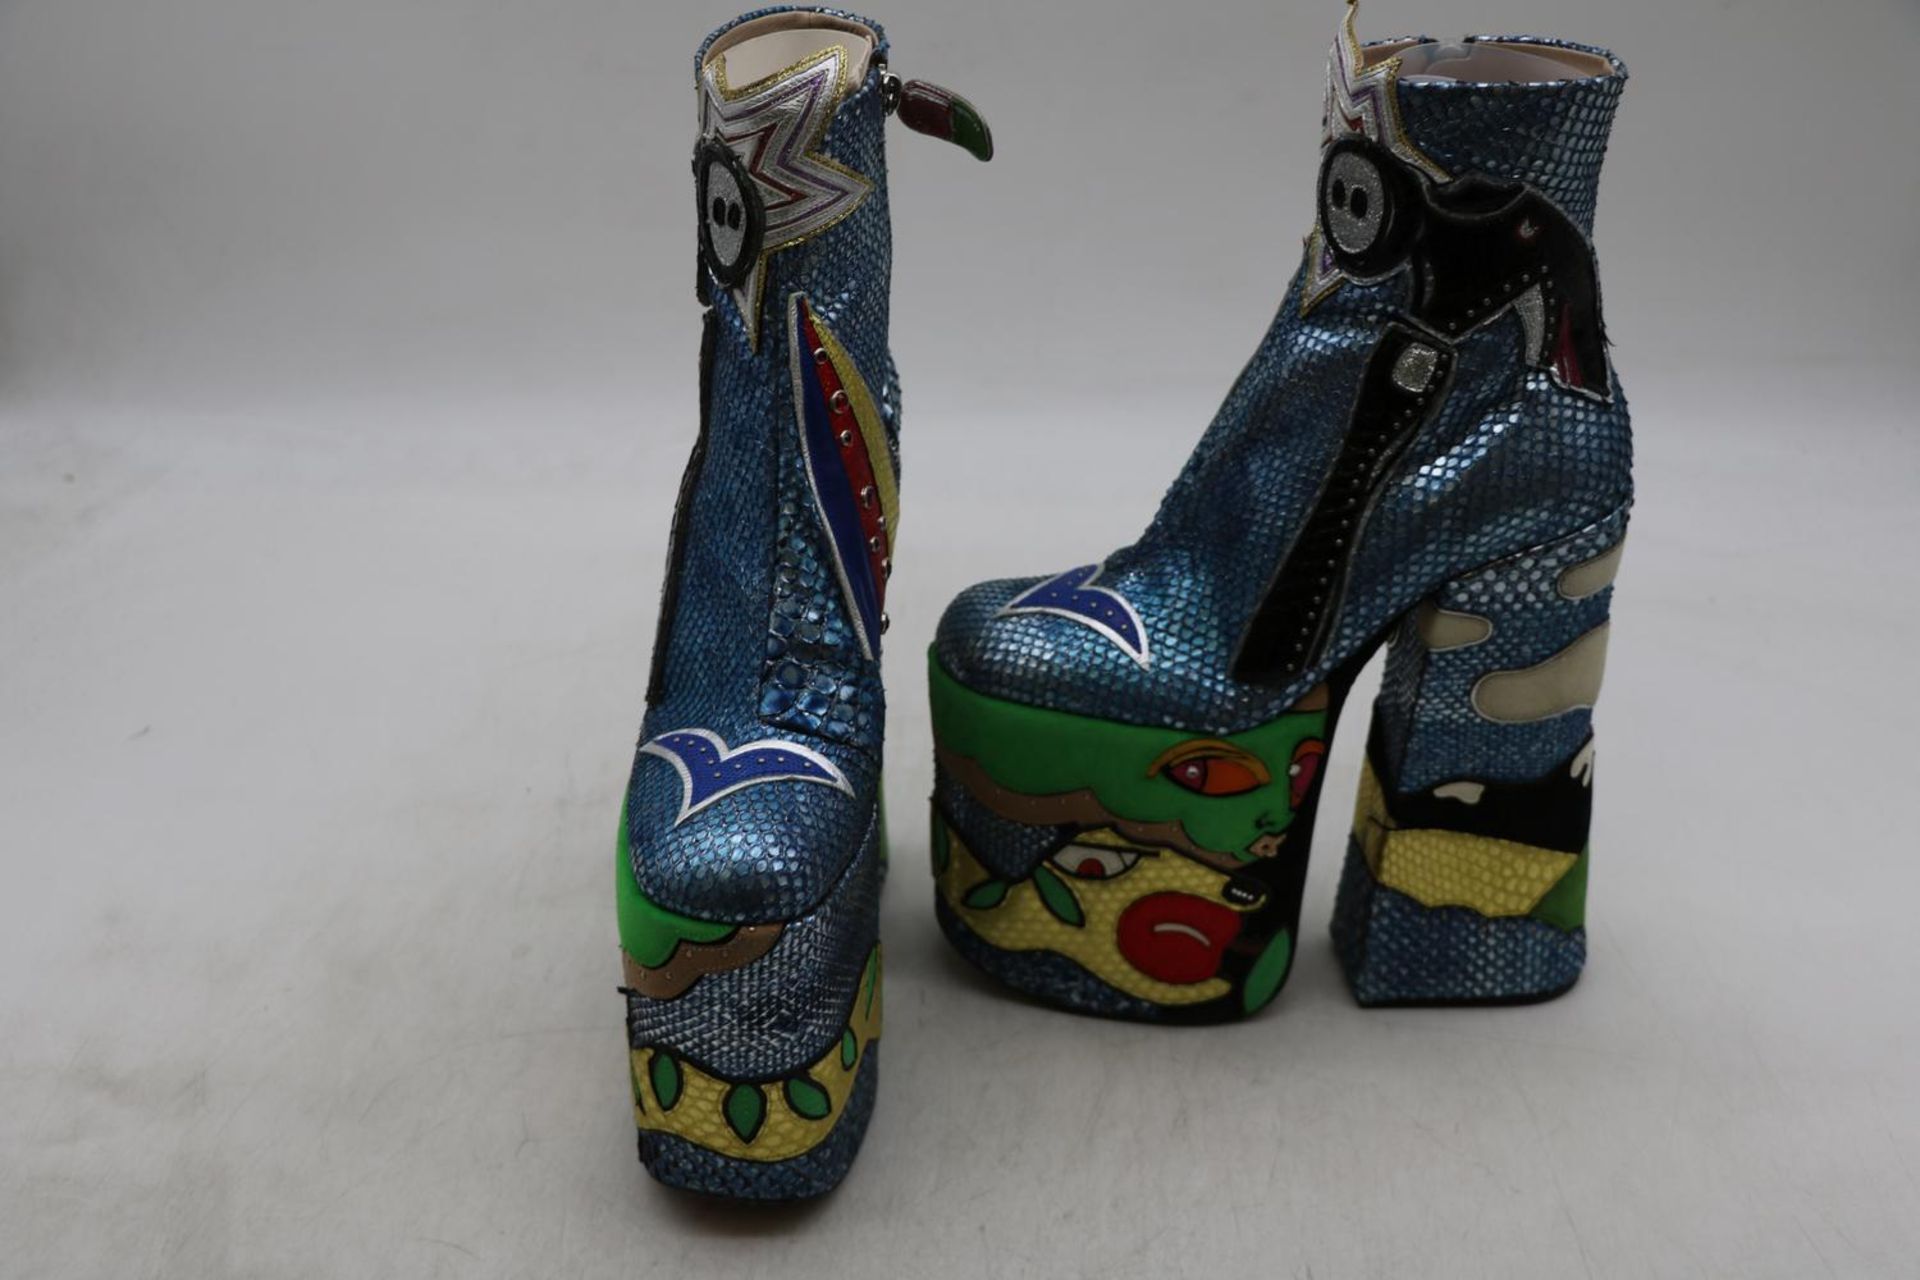 Marc Jacobs Women's 7.5" Heel Julie Verhoeven Psychedelic Platform Shoes, Multi Design, Multicolour, - Image 2 of 2